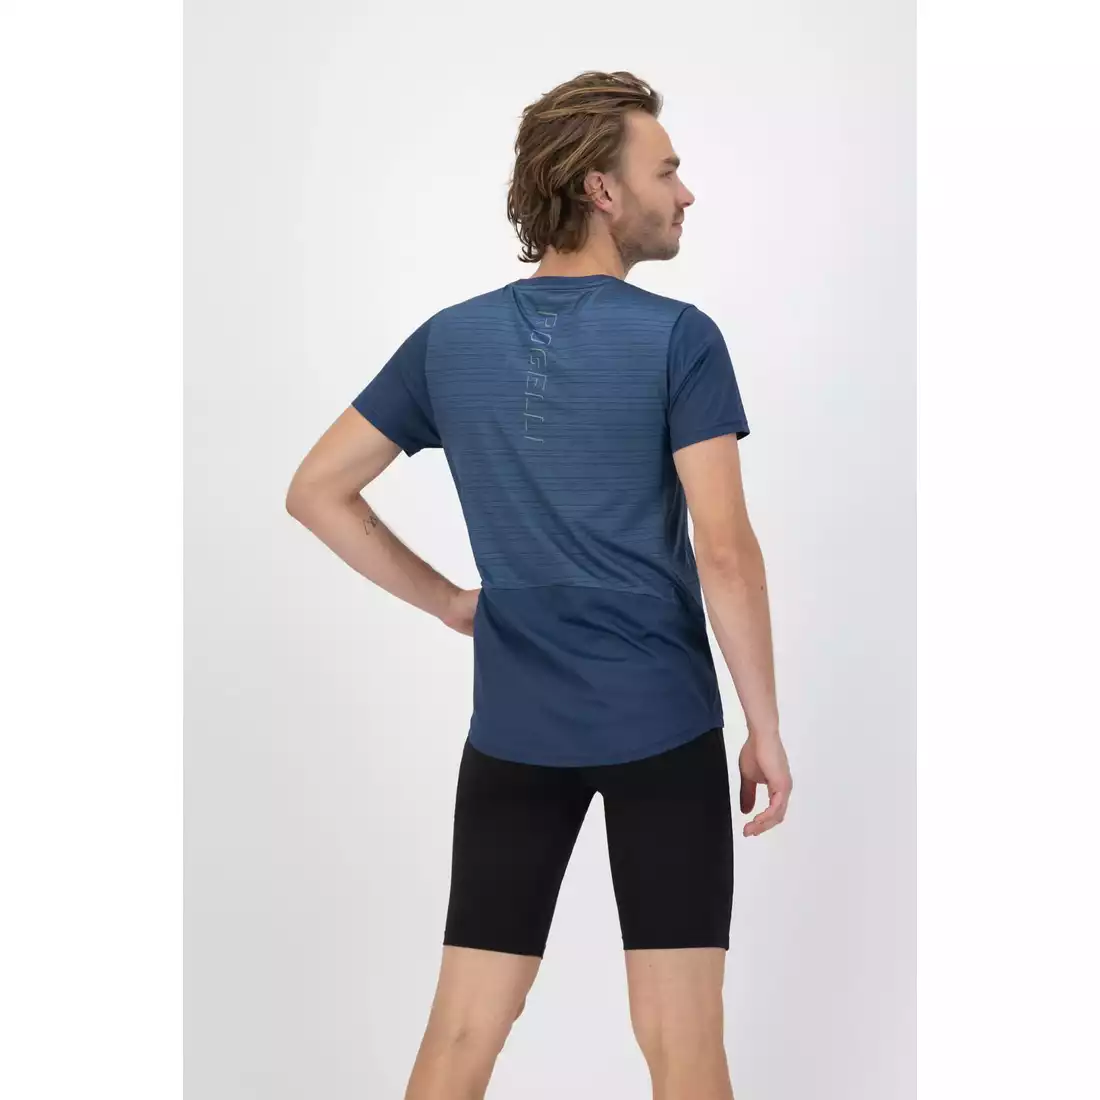 Rogelli CORE men's running t-shirt, blue